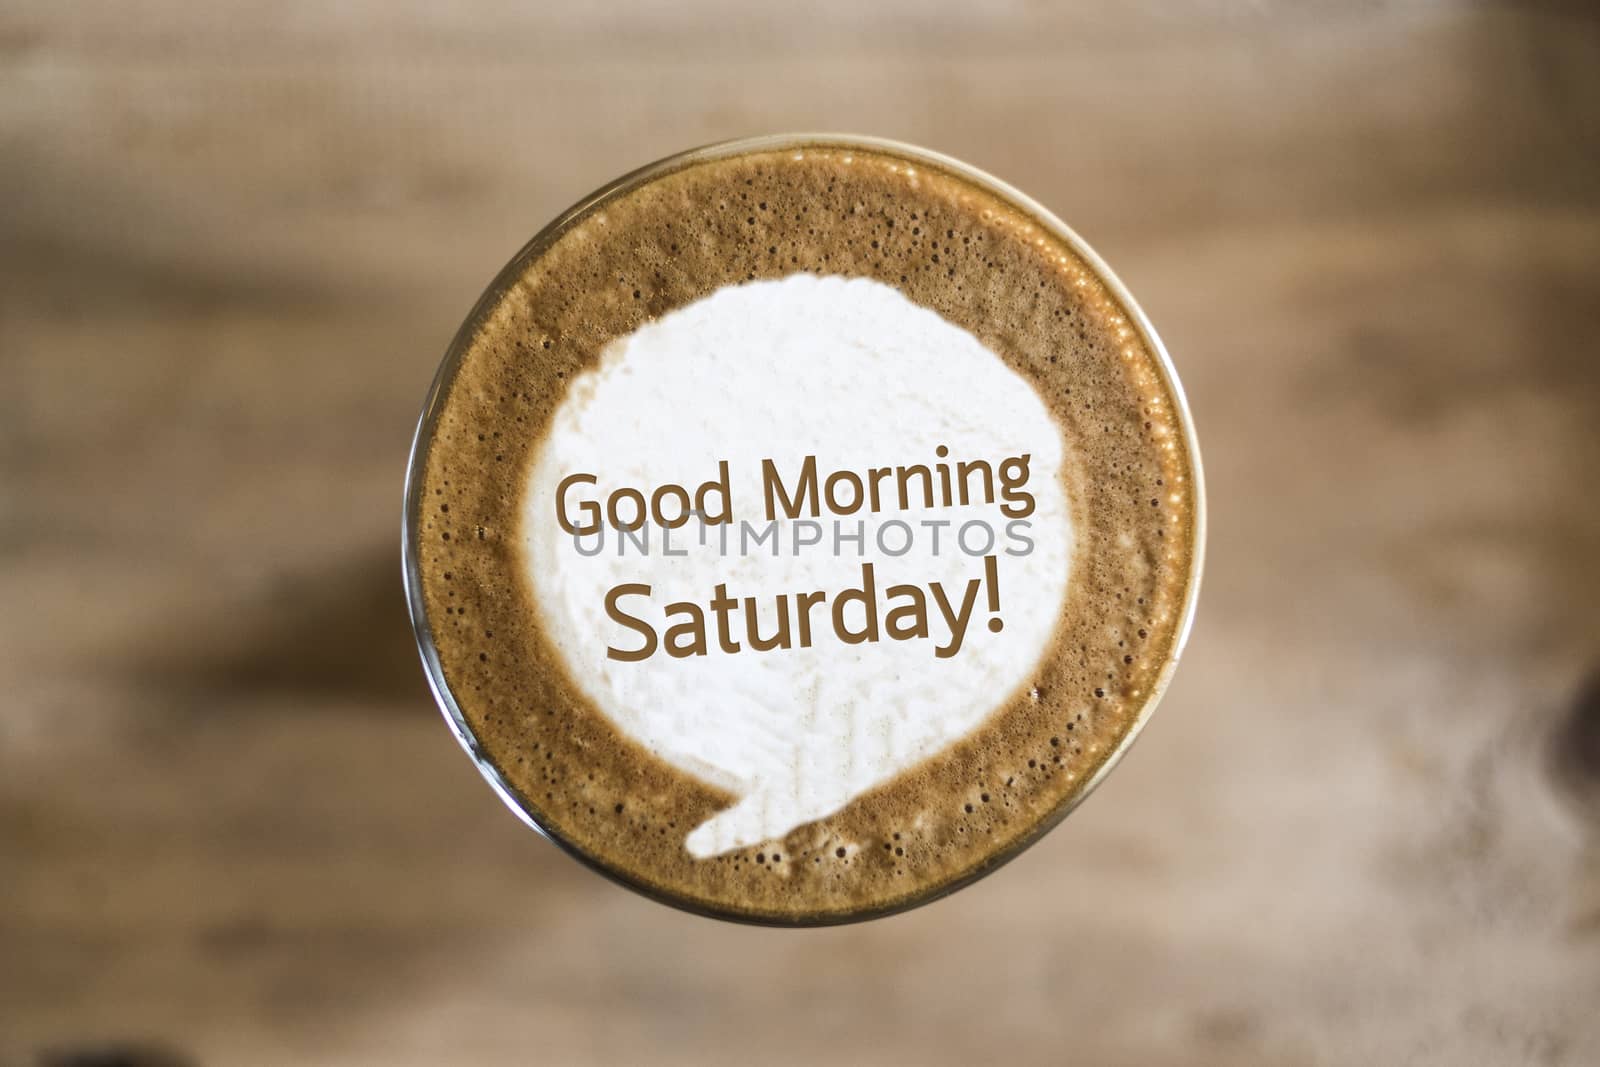 Good Morning Saturday on Coffee latte art concept